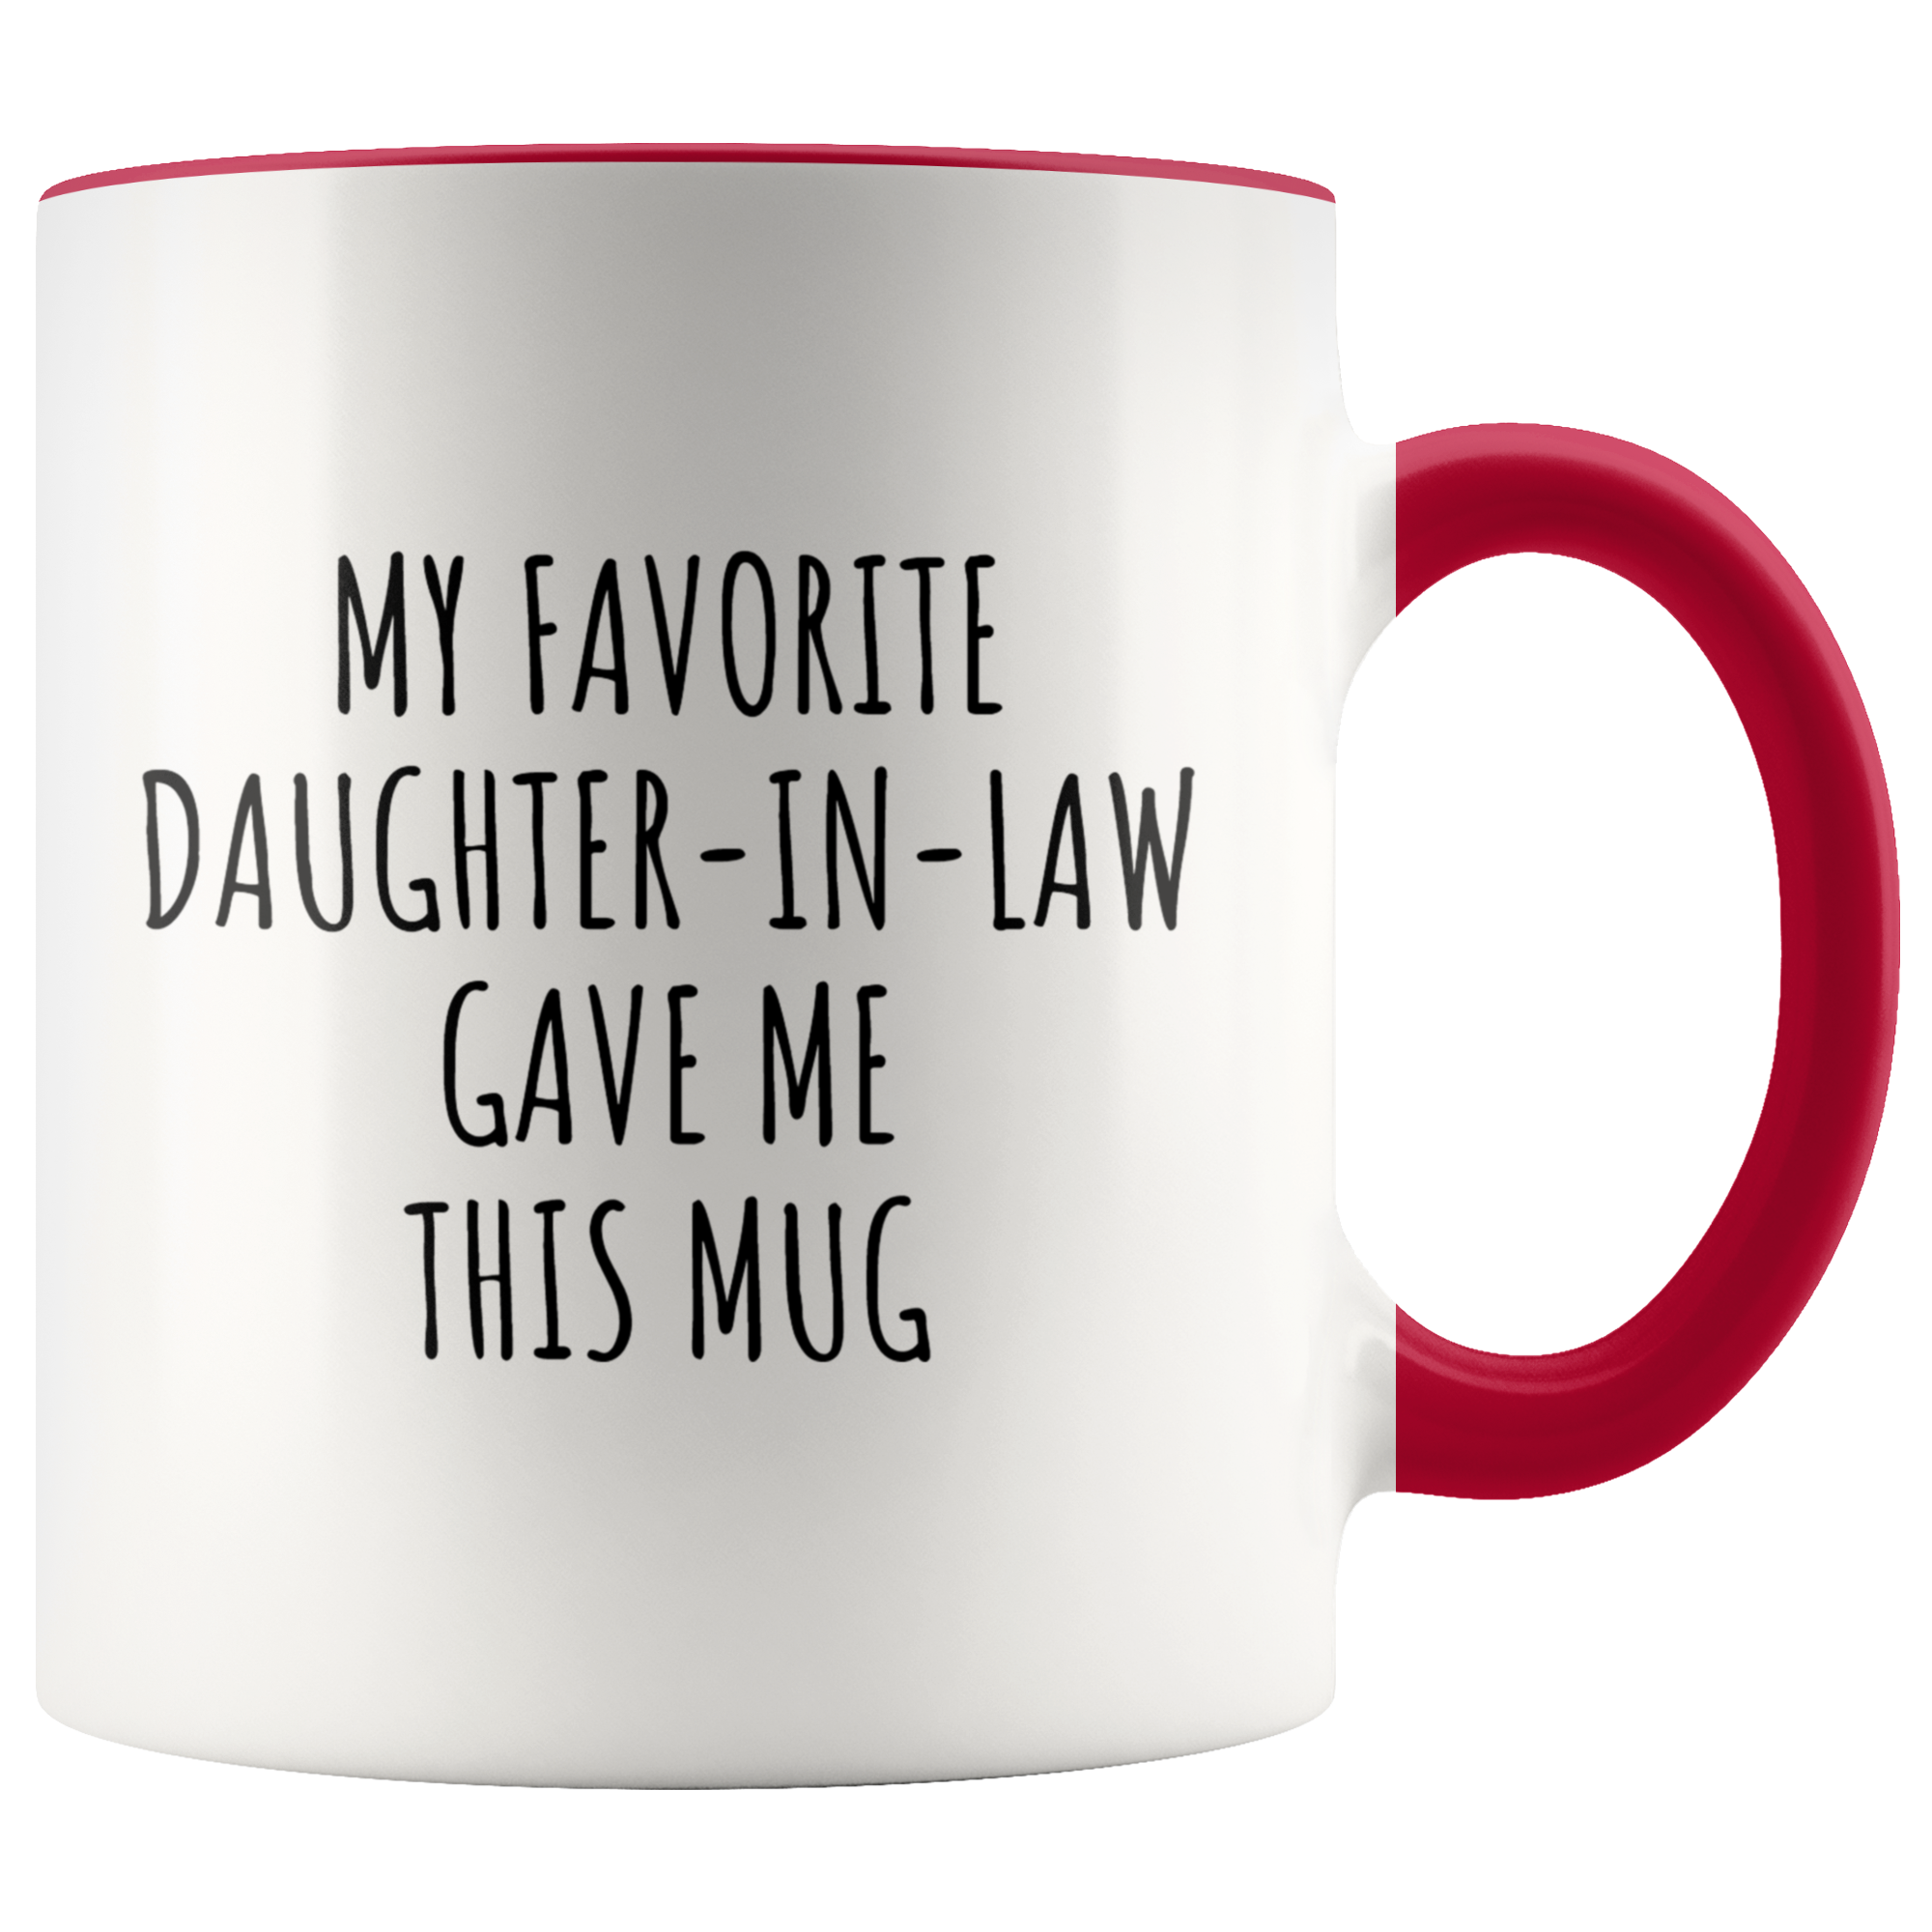 Funny Father-In-Law Mug